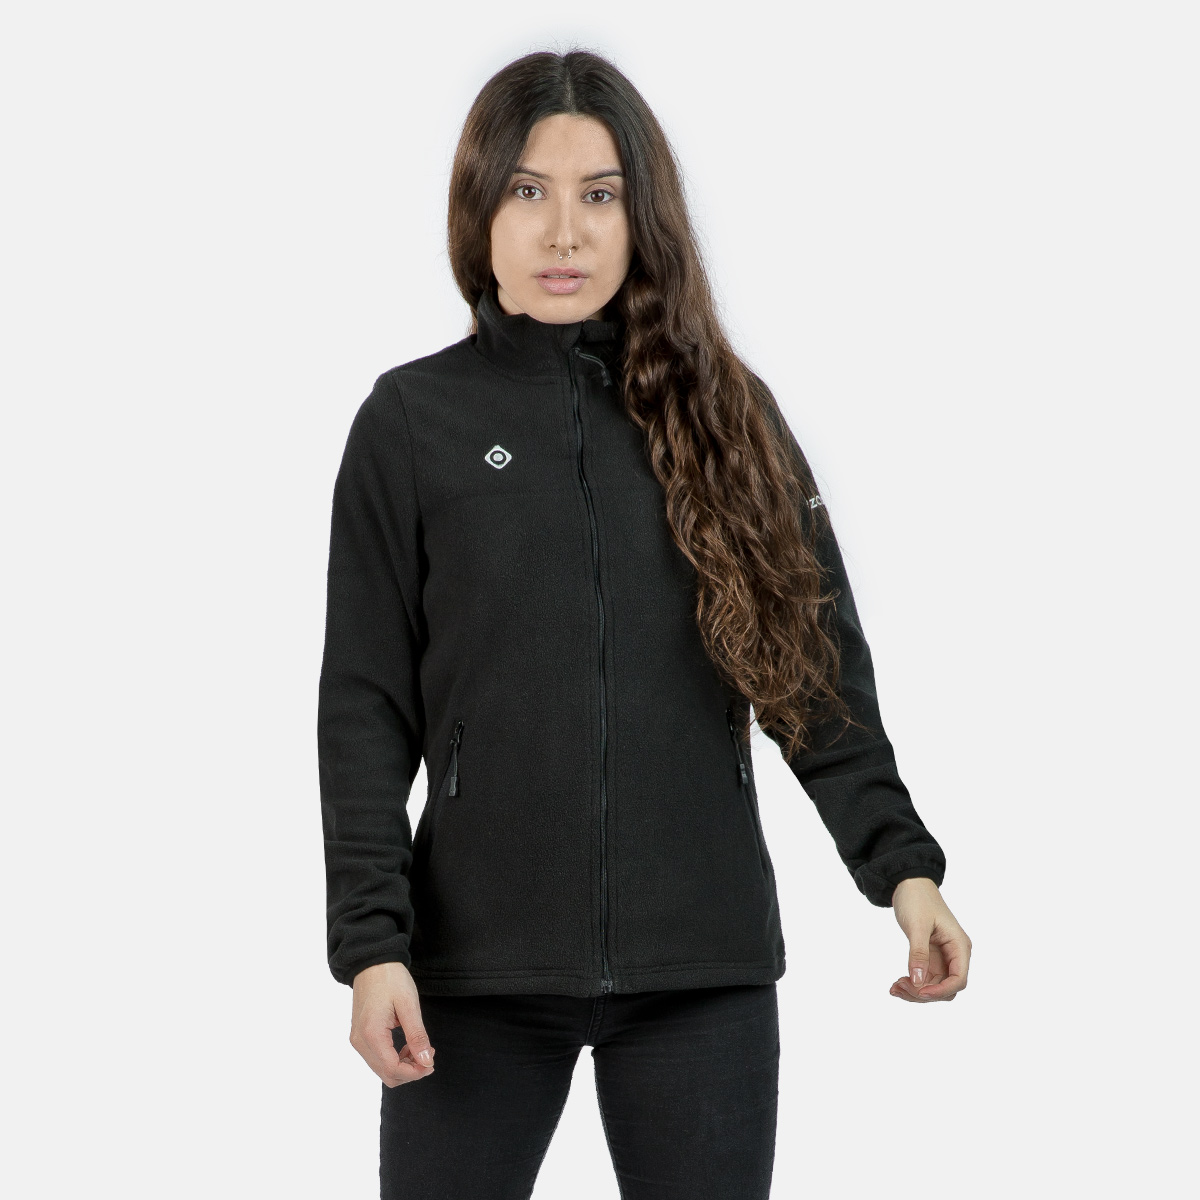 Chaqueta con capucha resistente al viento para mujer, abrigo impermeable  para exteriores, impermeable, chaqueta de forro polar negro (gris-1, XXXXXL)